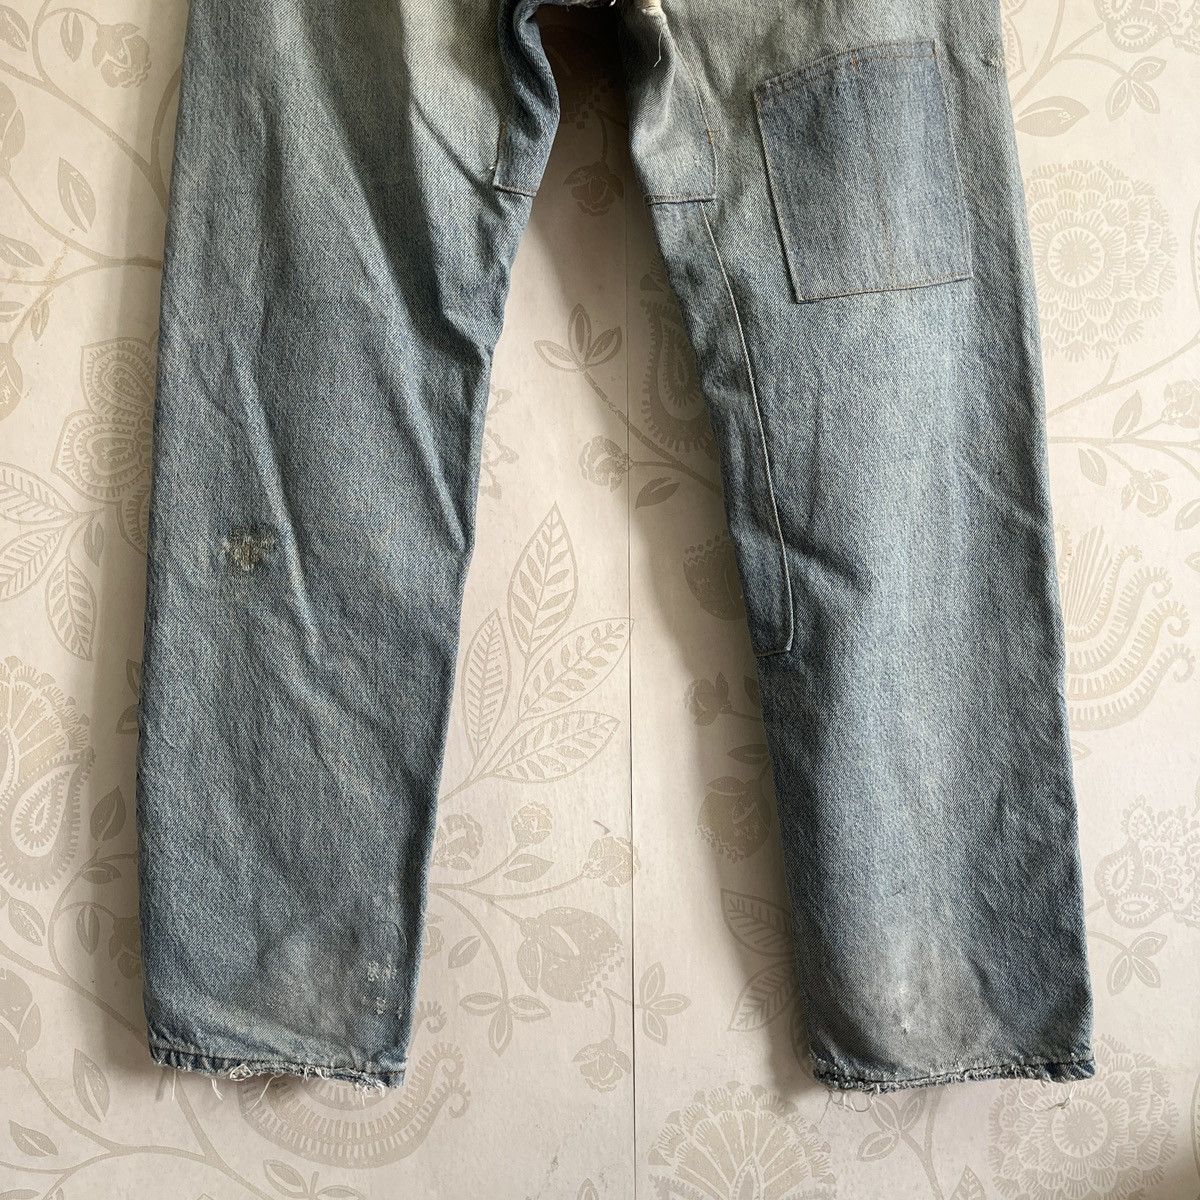 Grails Vintage Custom Matsuda Kapital Patches Japanese Jeans - 16